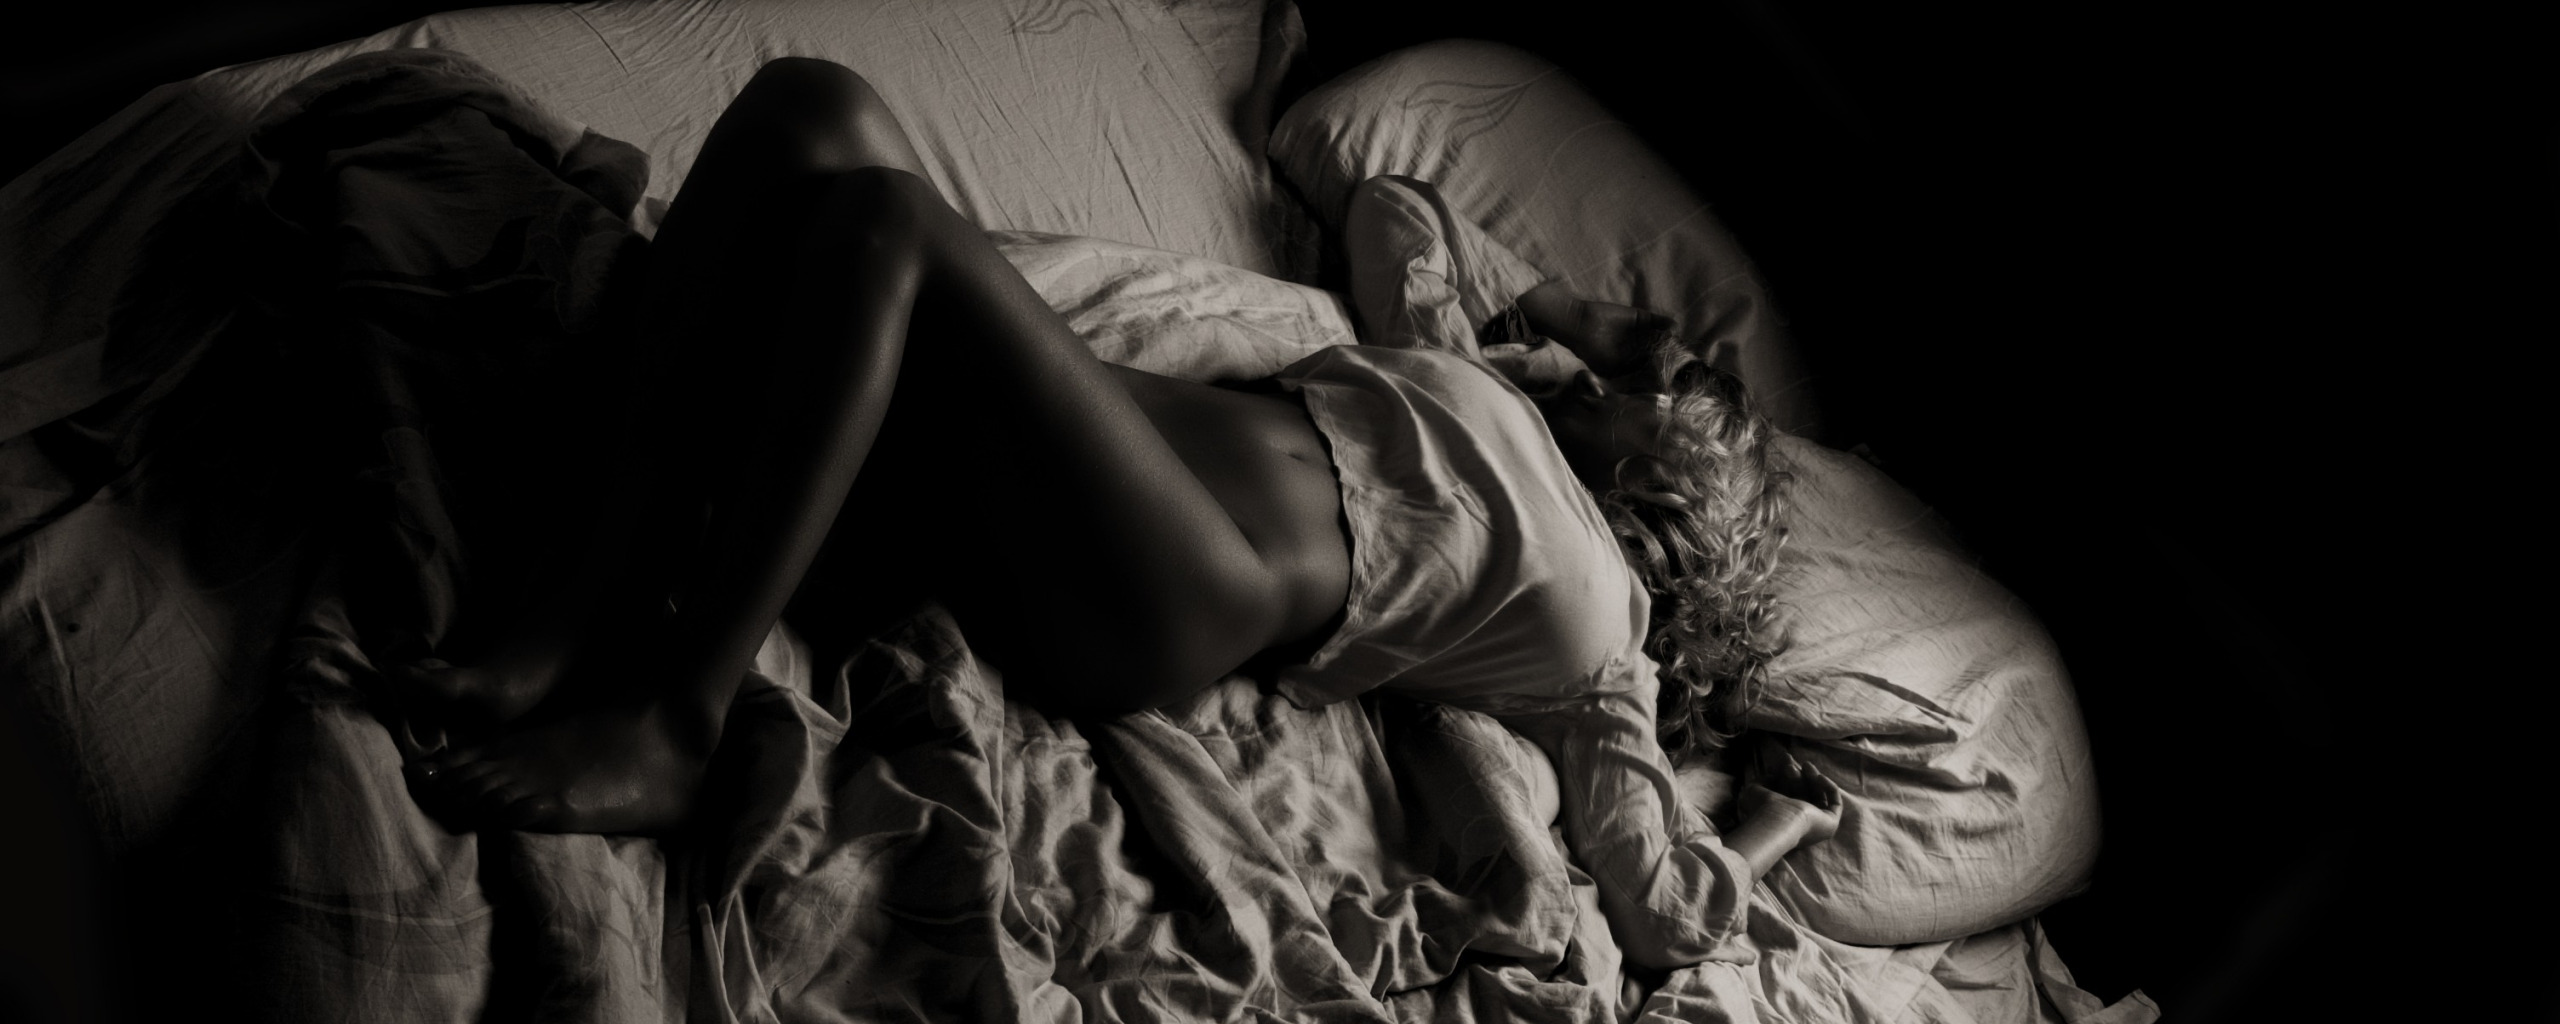 Девушка спит в темноте на кровати